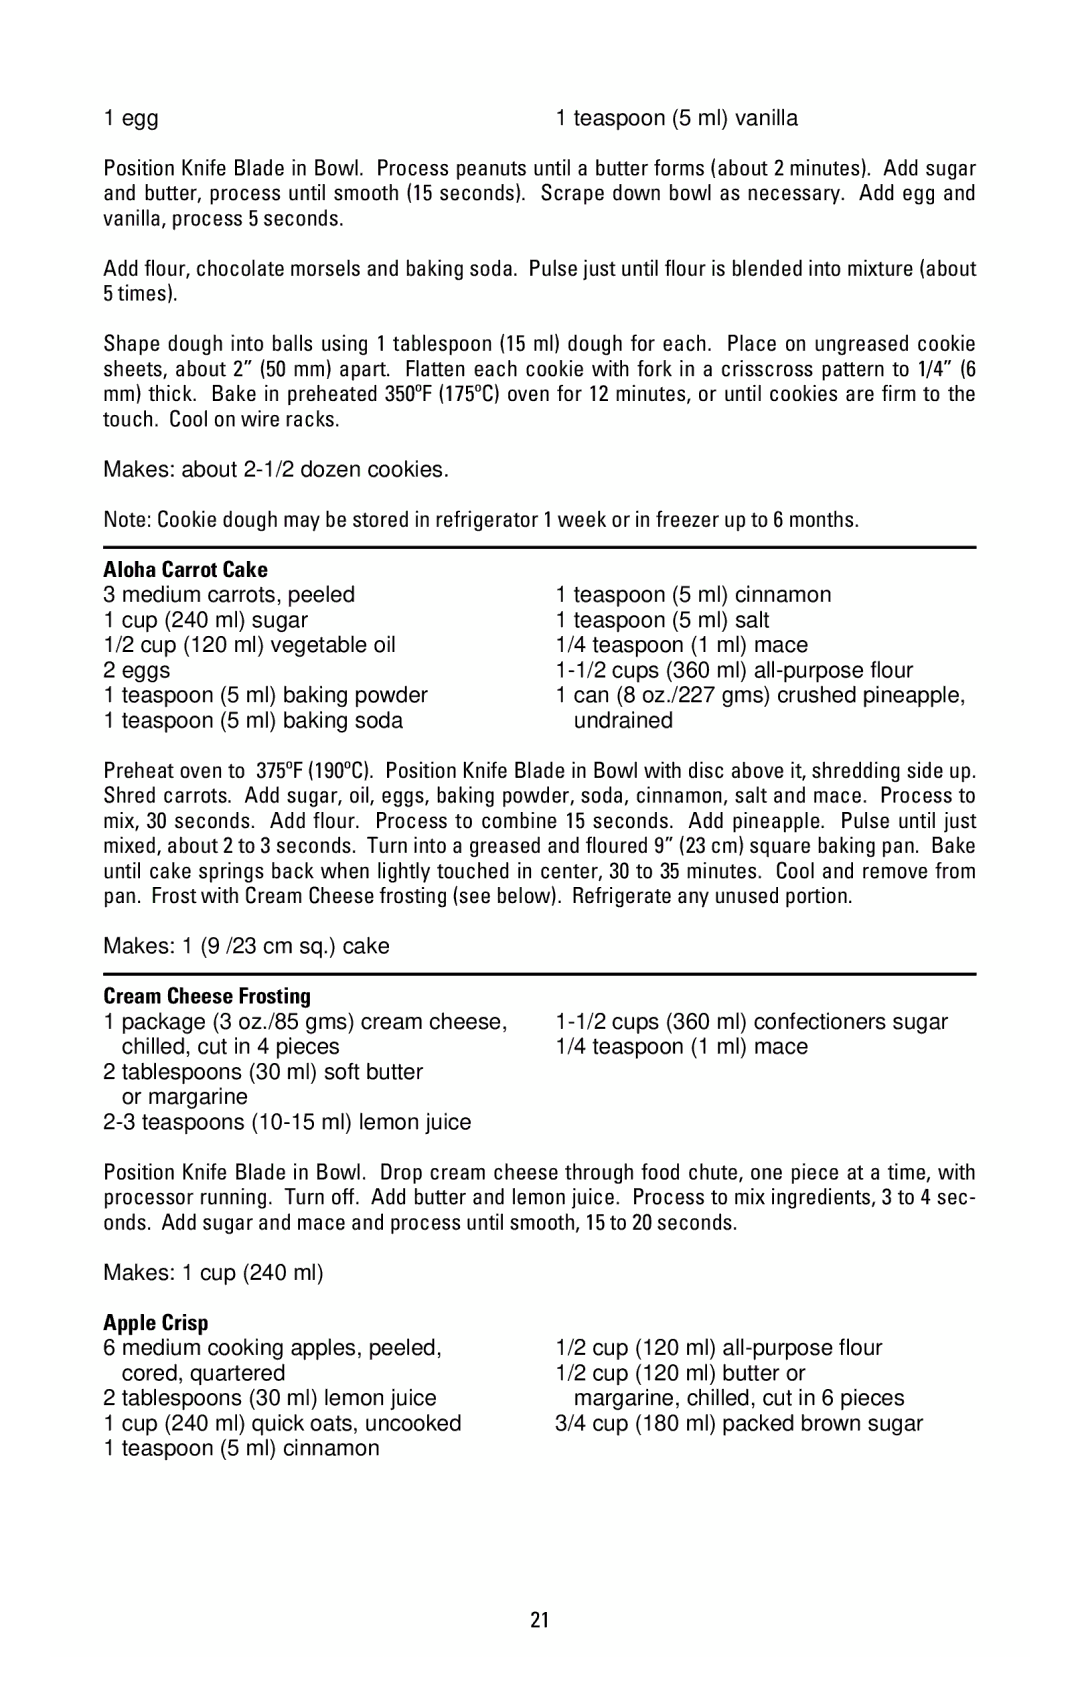 Black & Decker FP1000 manual Aloha Carrot Cake, Cream Cheese Frosting, Apple Crisp 